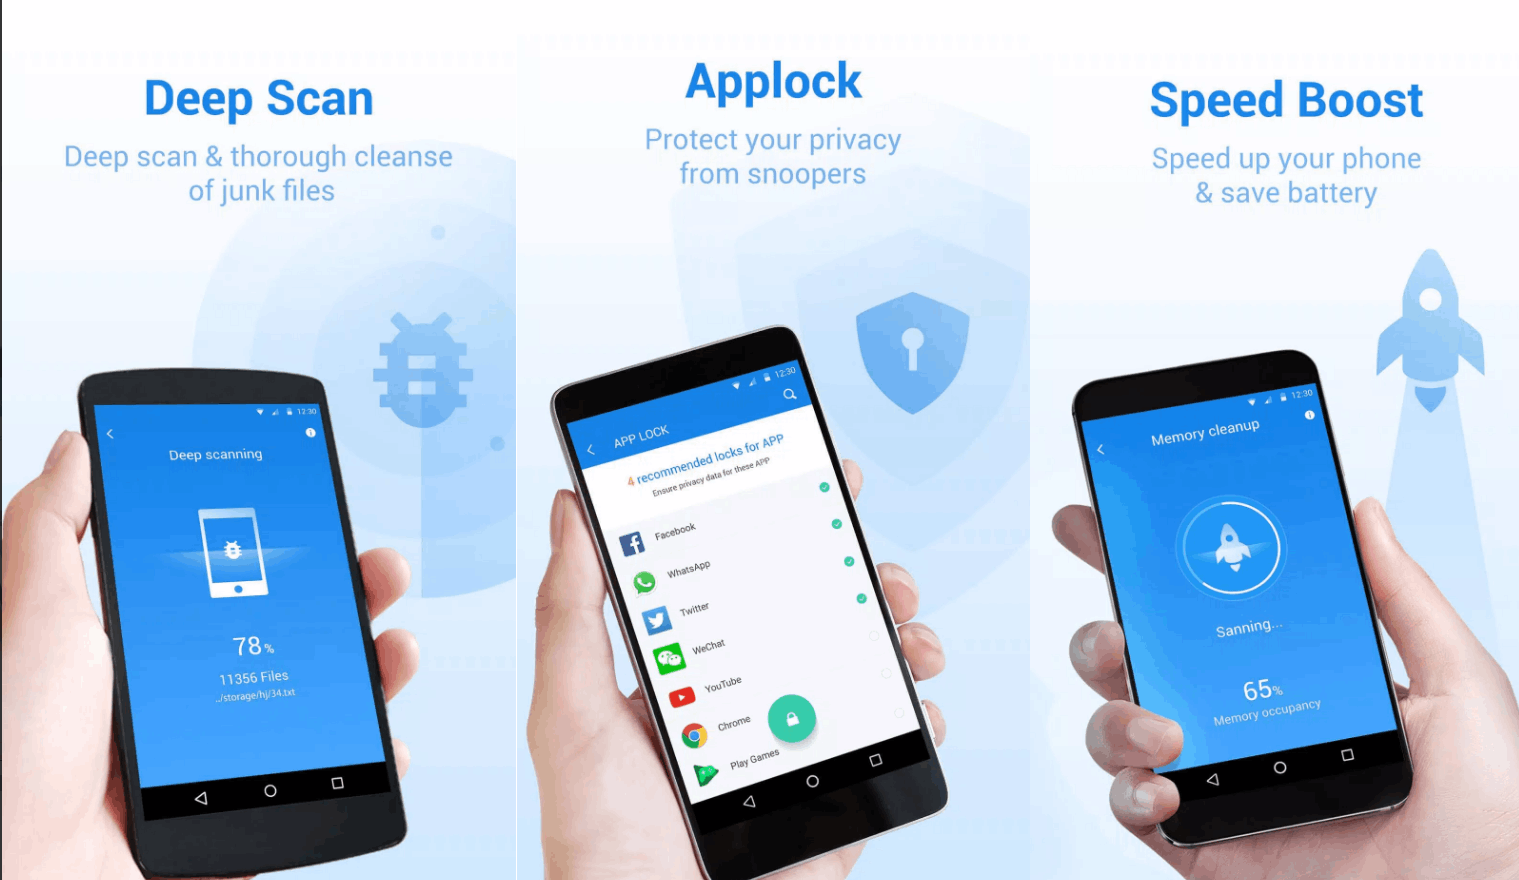 Super Security App - Keep Phones Safe